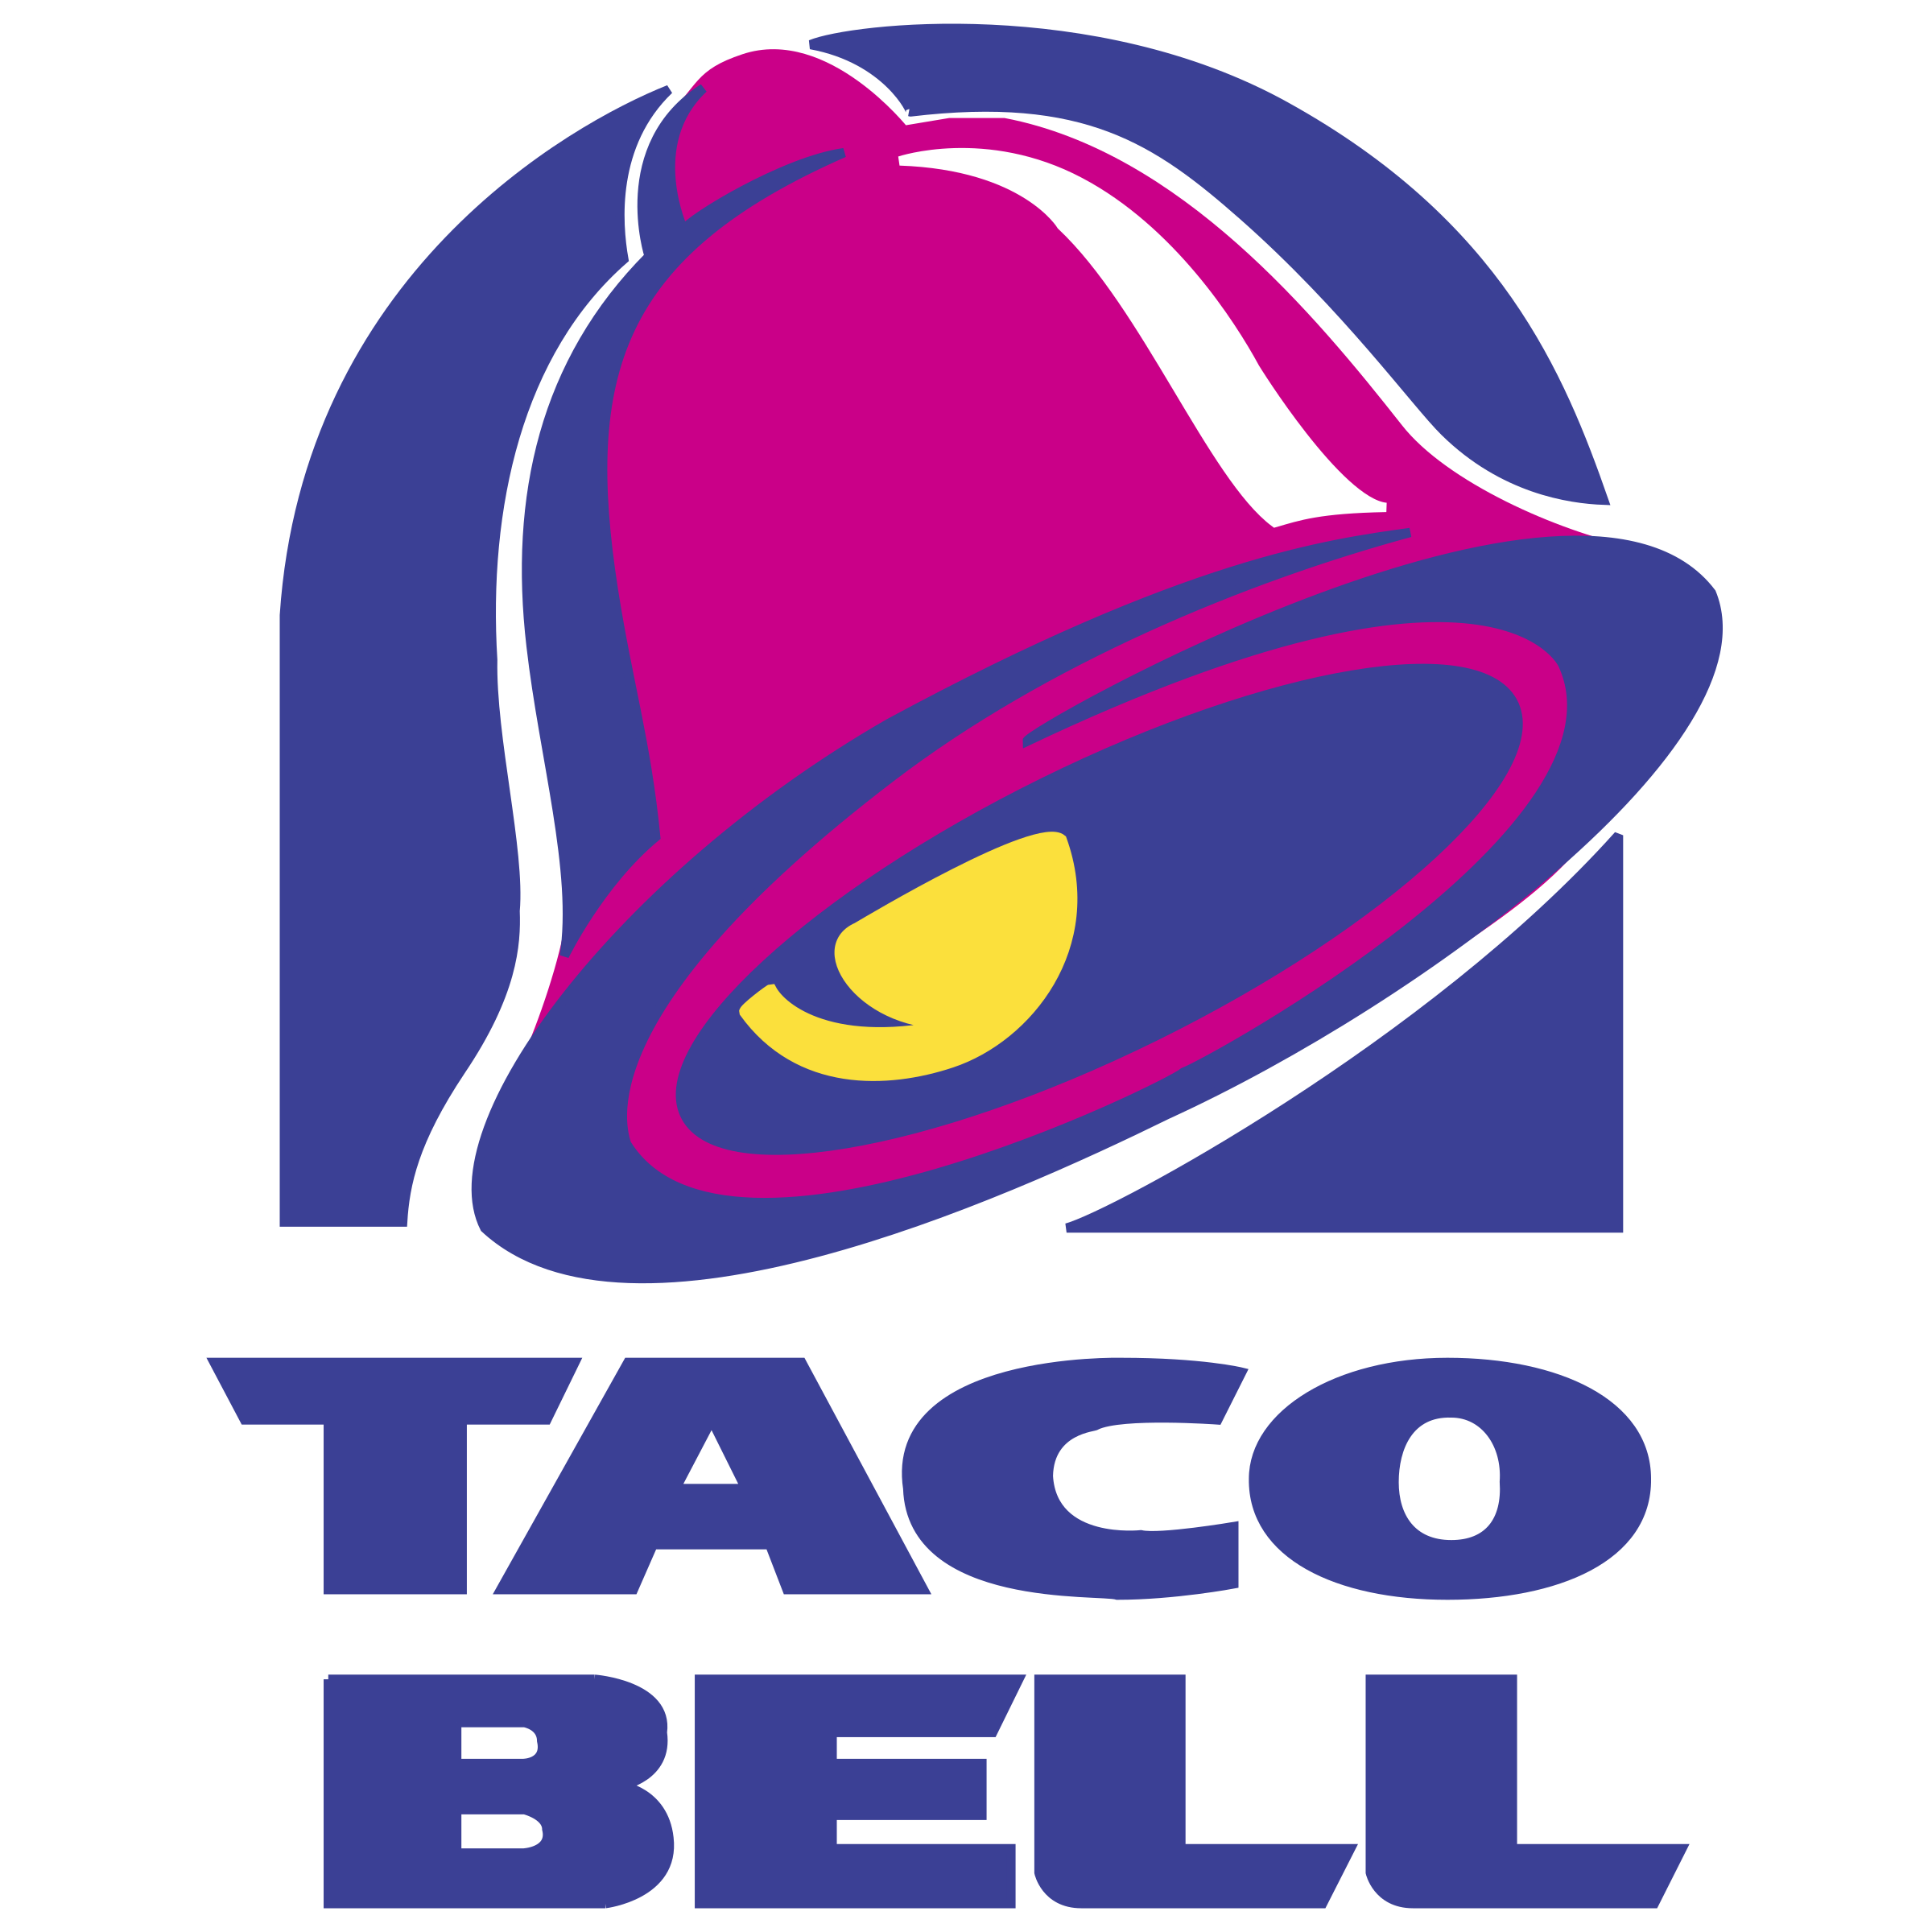 Taco bell logo png. Tacos clipart svg